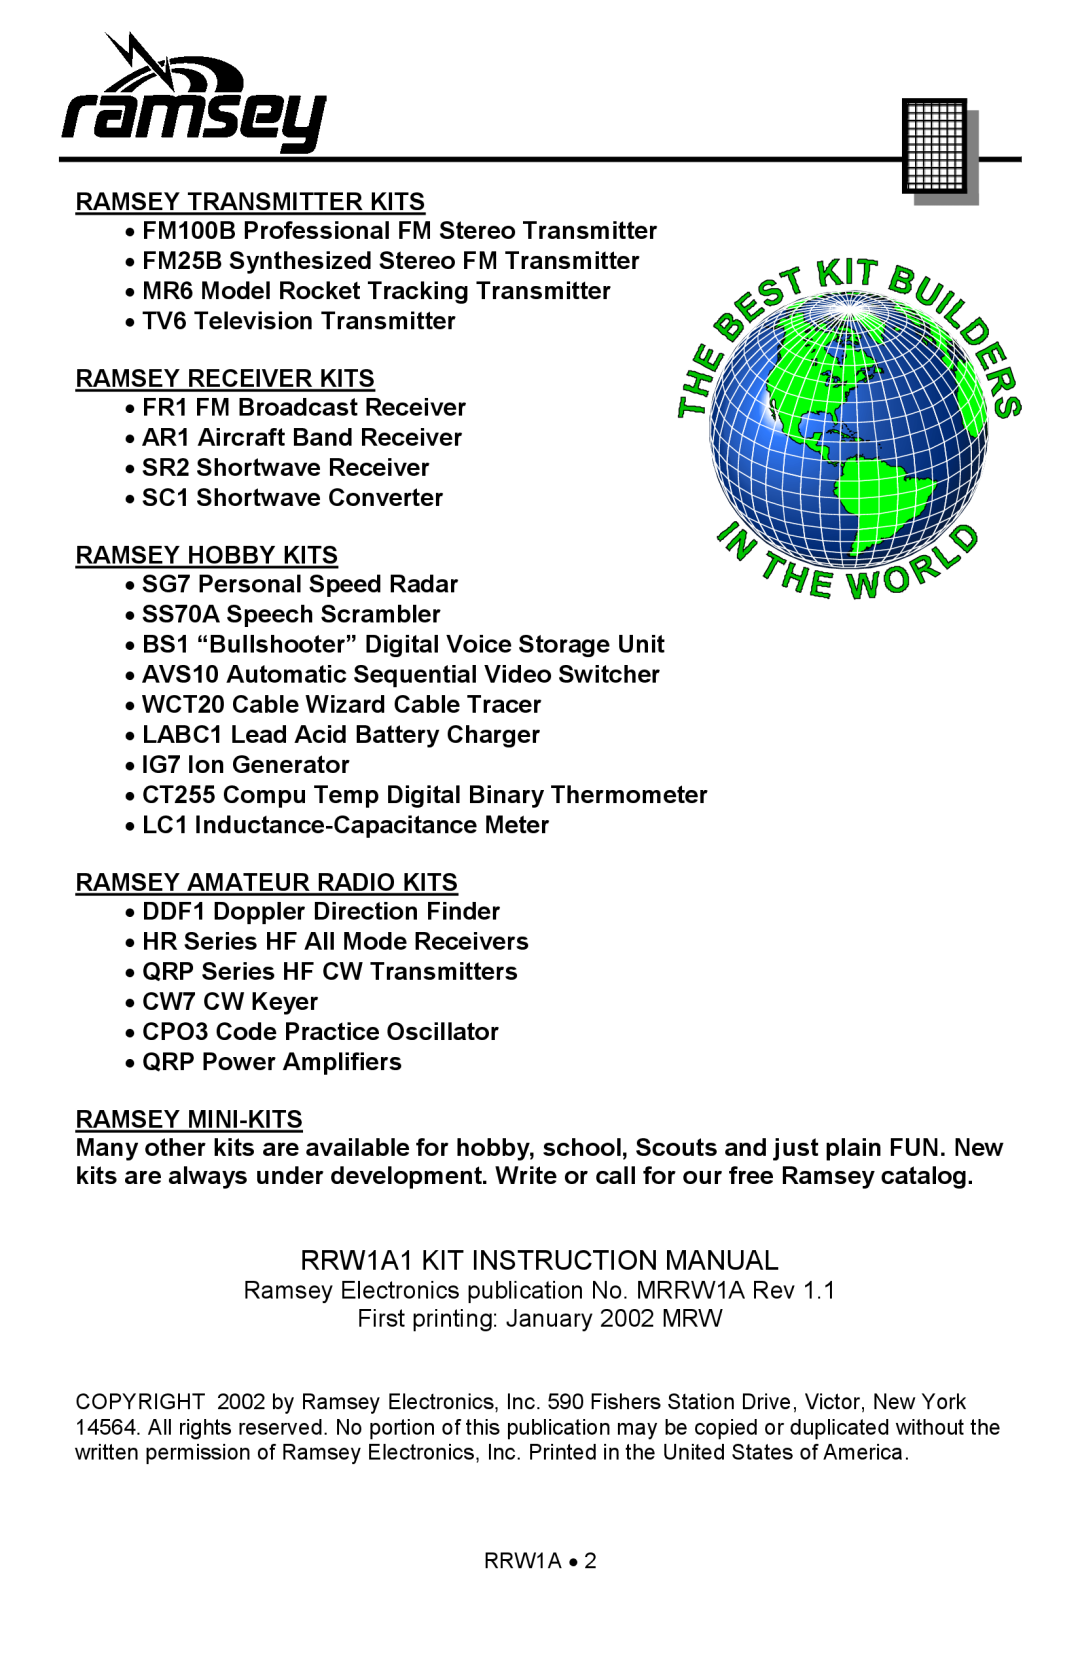 Ramsey Electronics RRW1A manual 